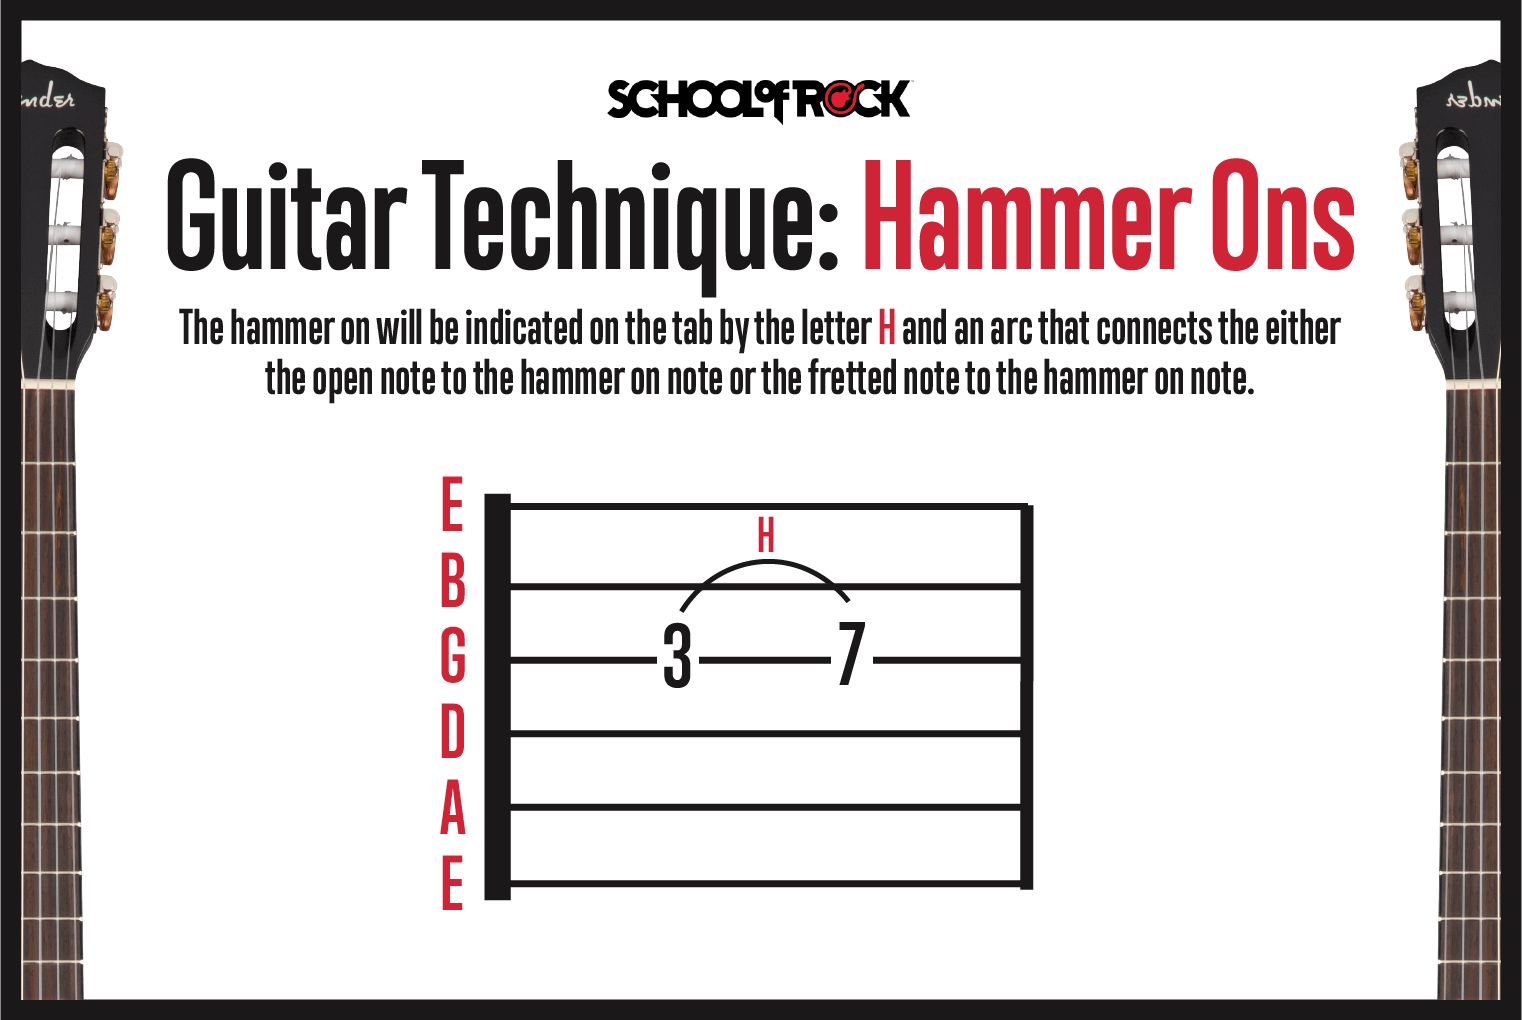 Guitar technique hammer ons